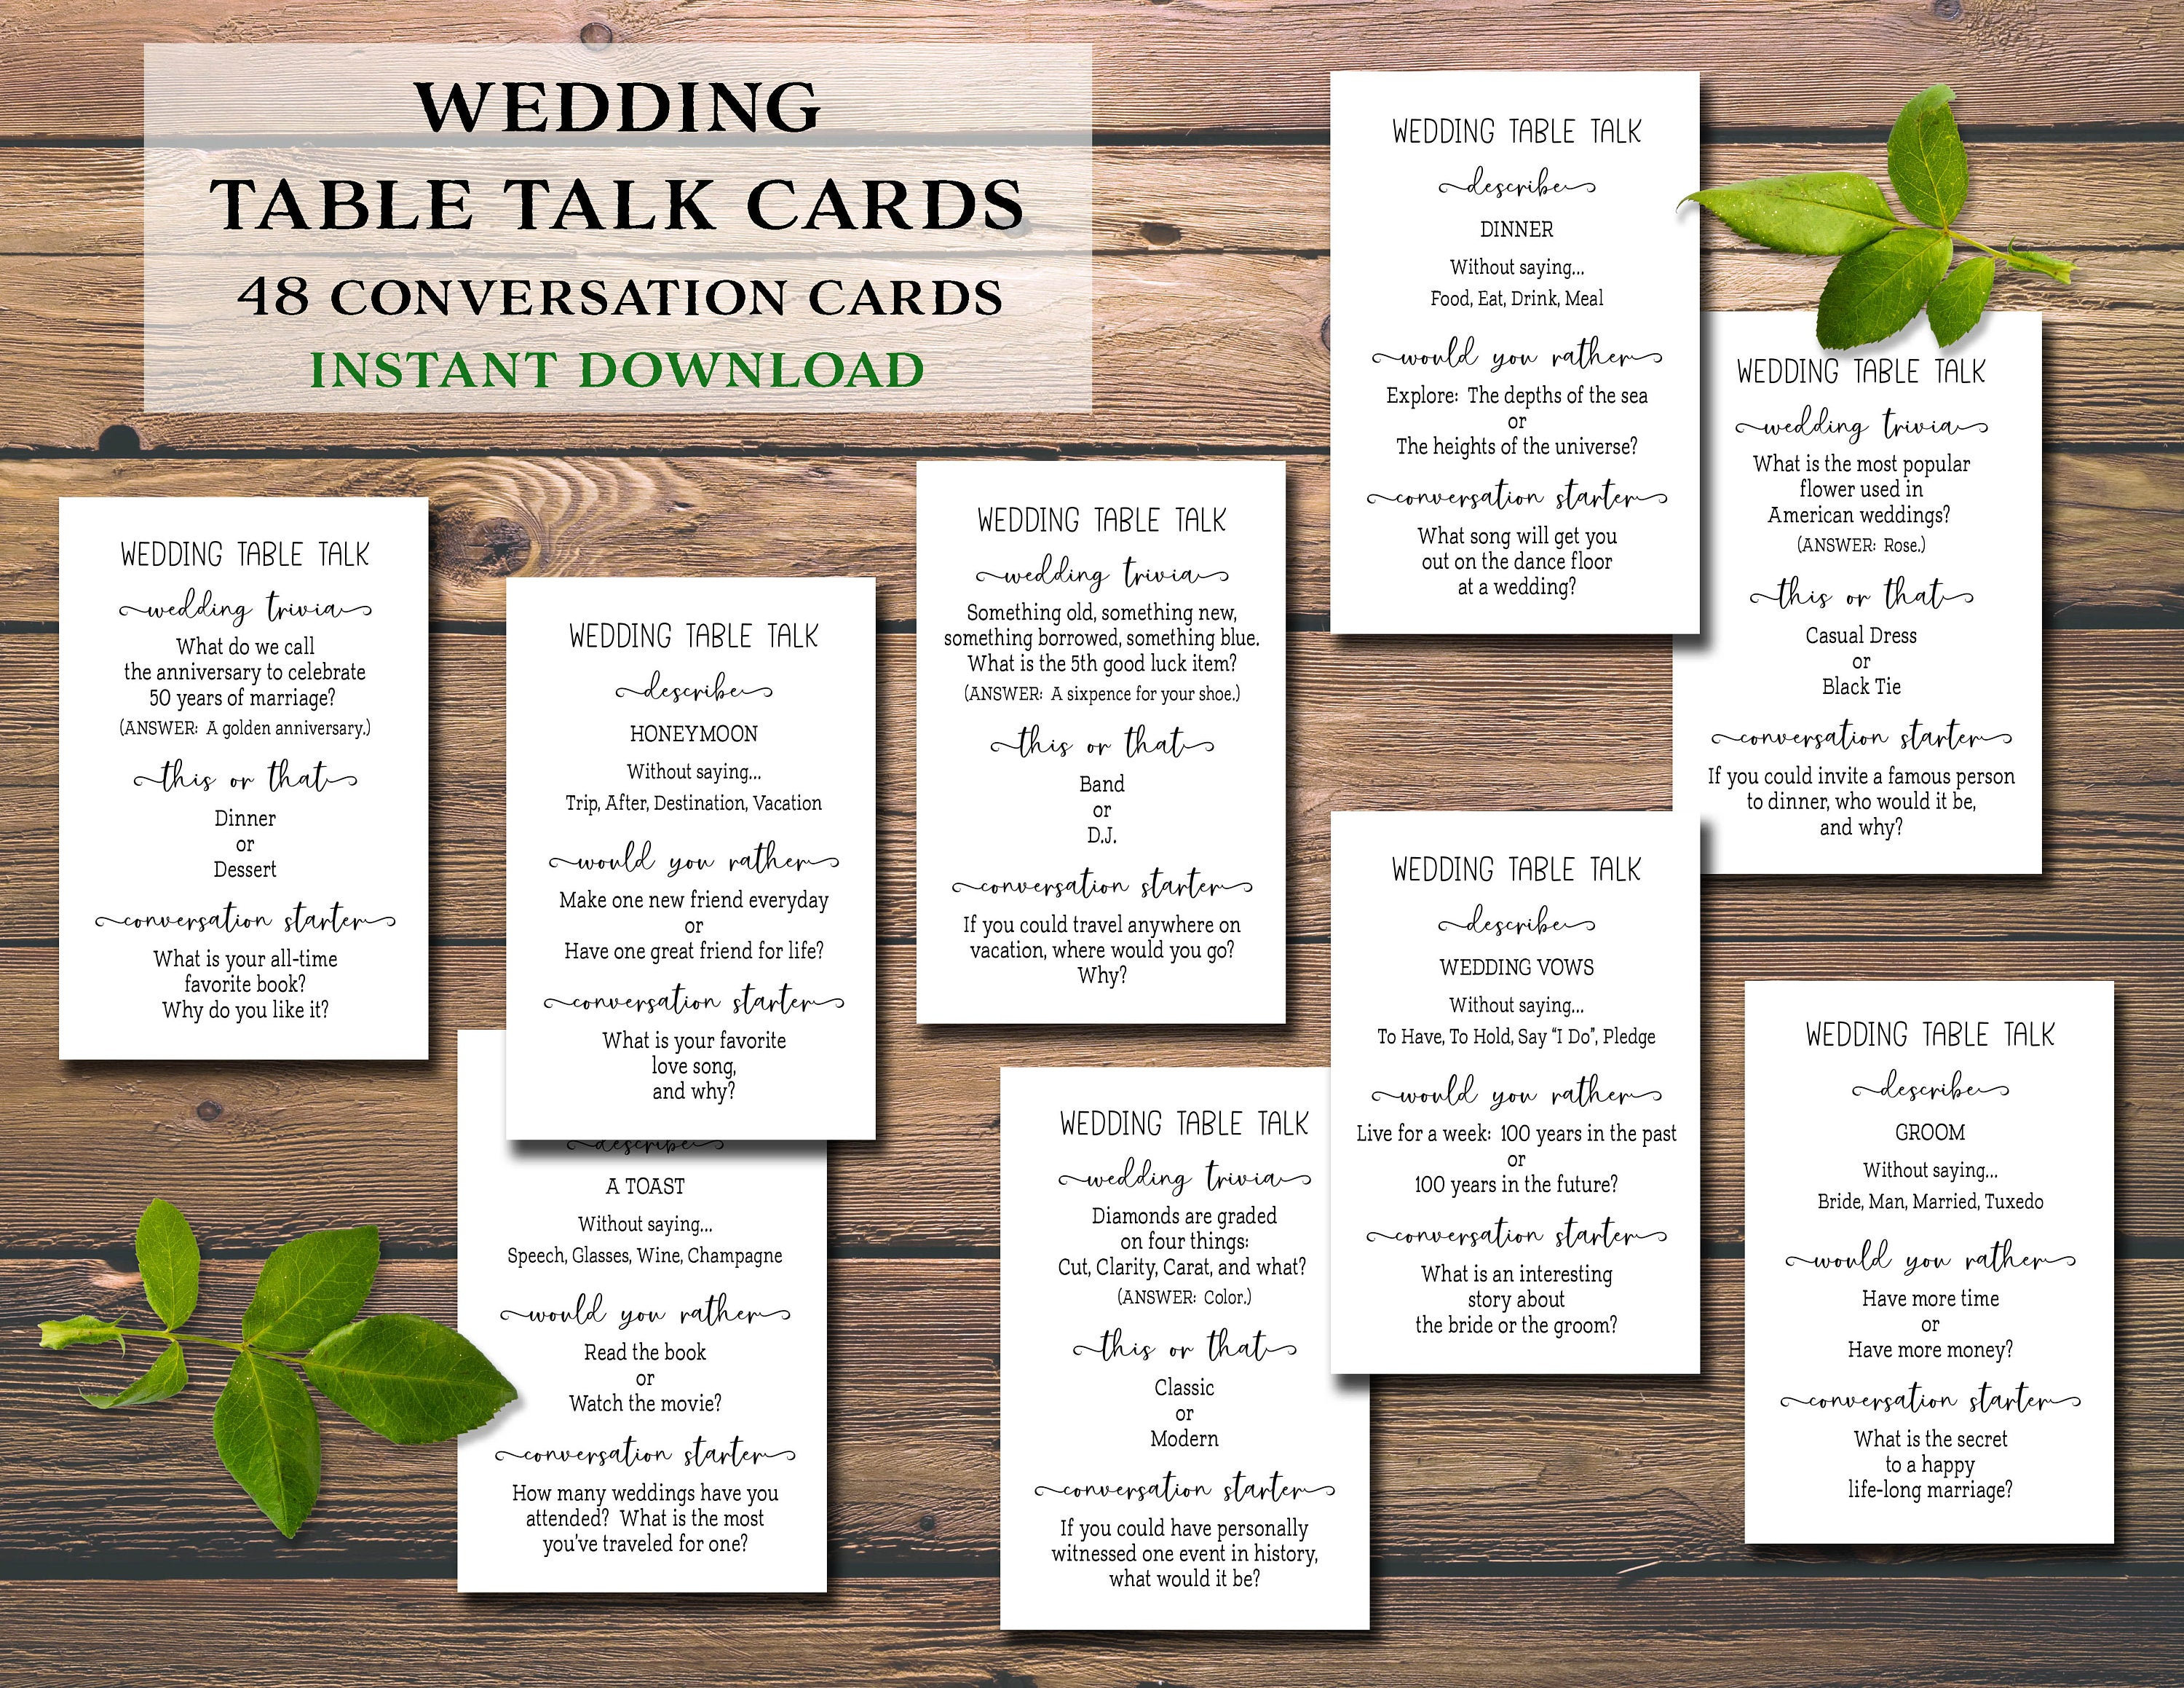 Card talk. Negotiating Table. 1 Minute talk Cards.